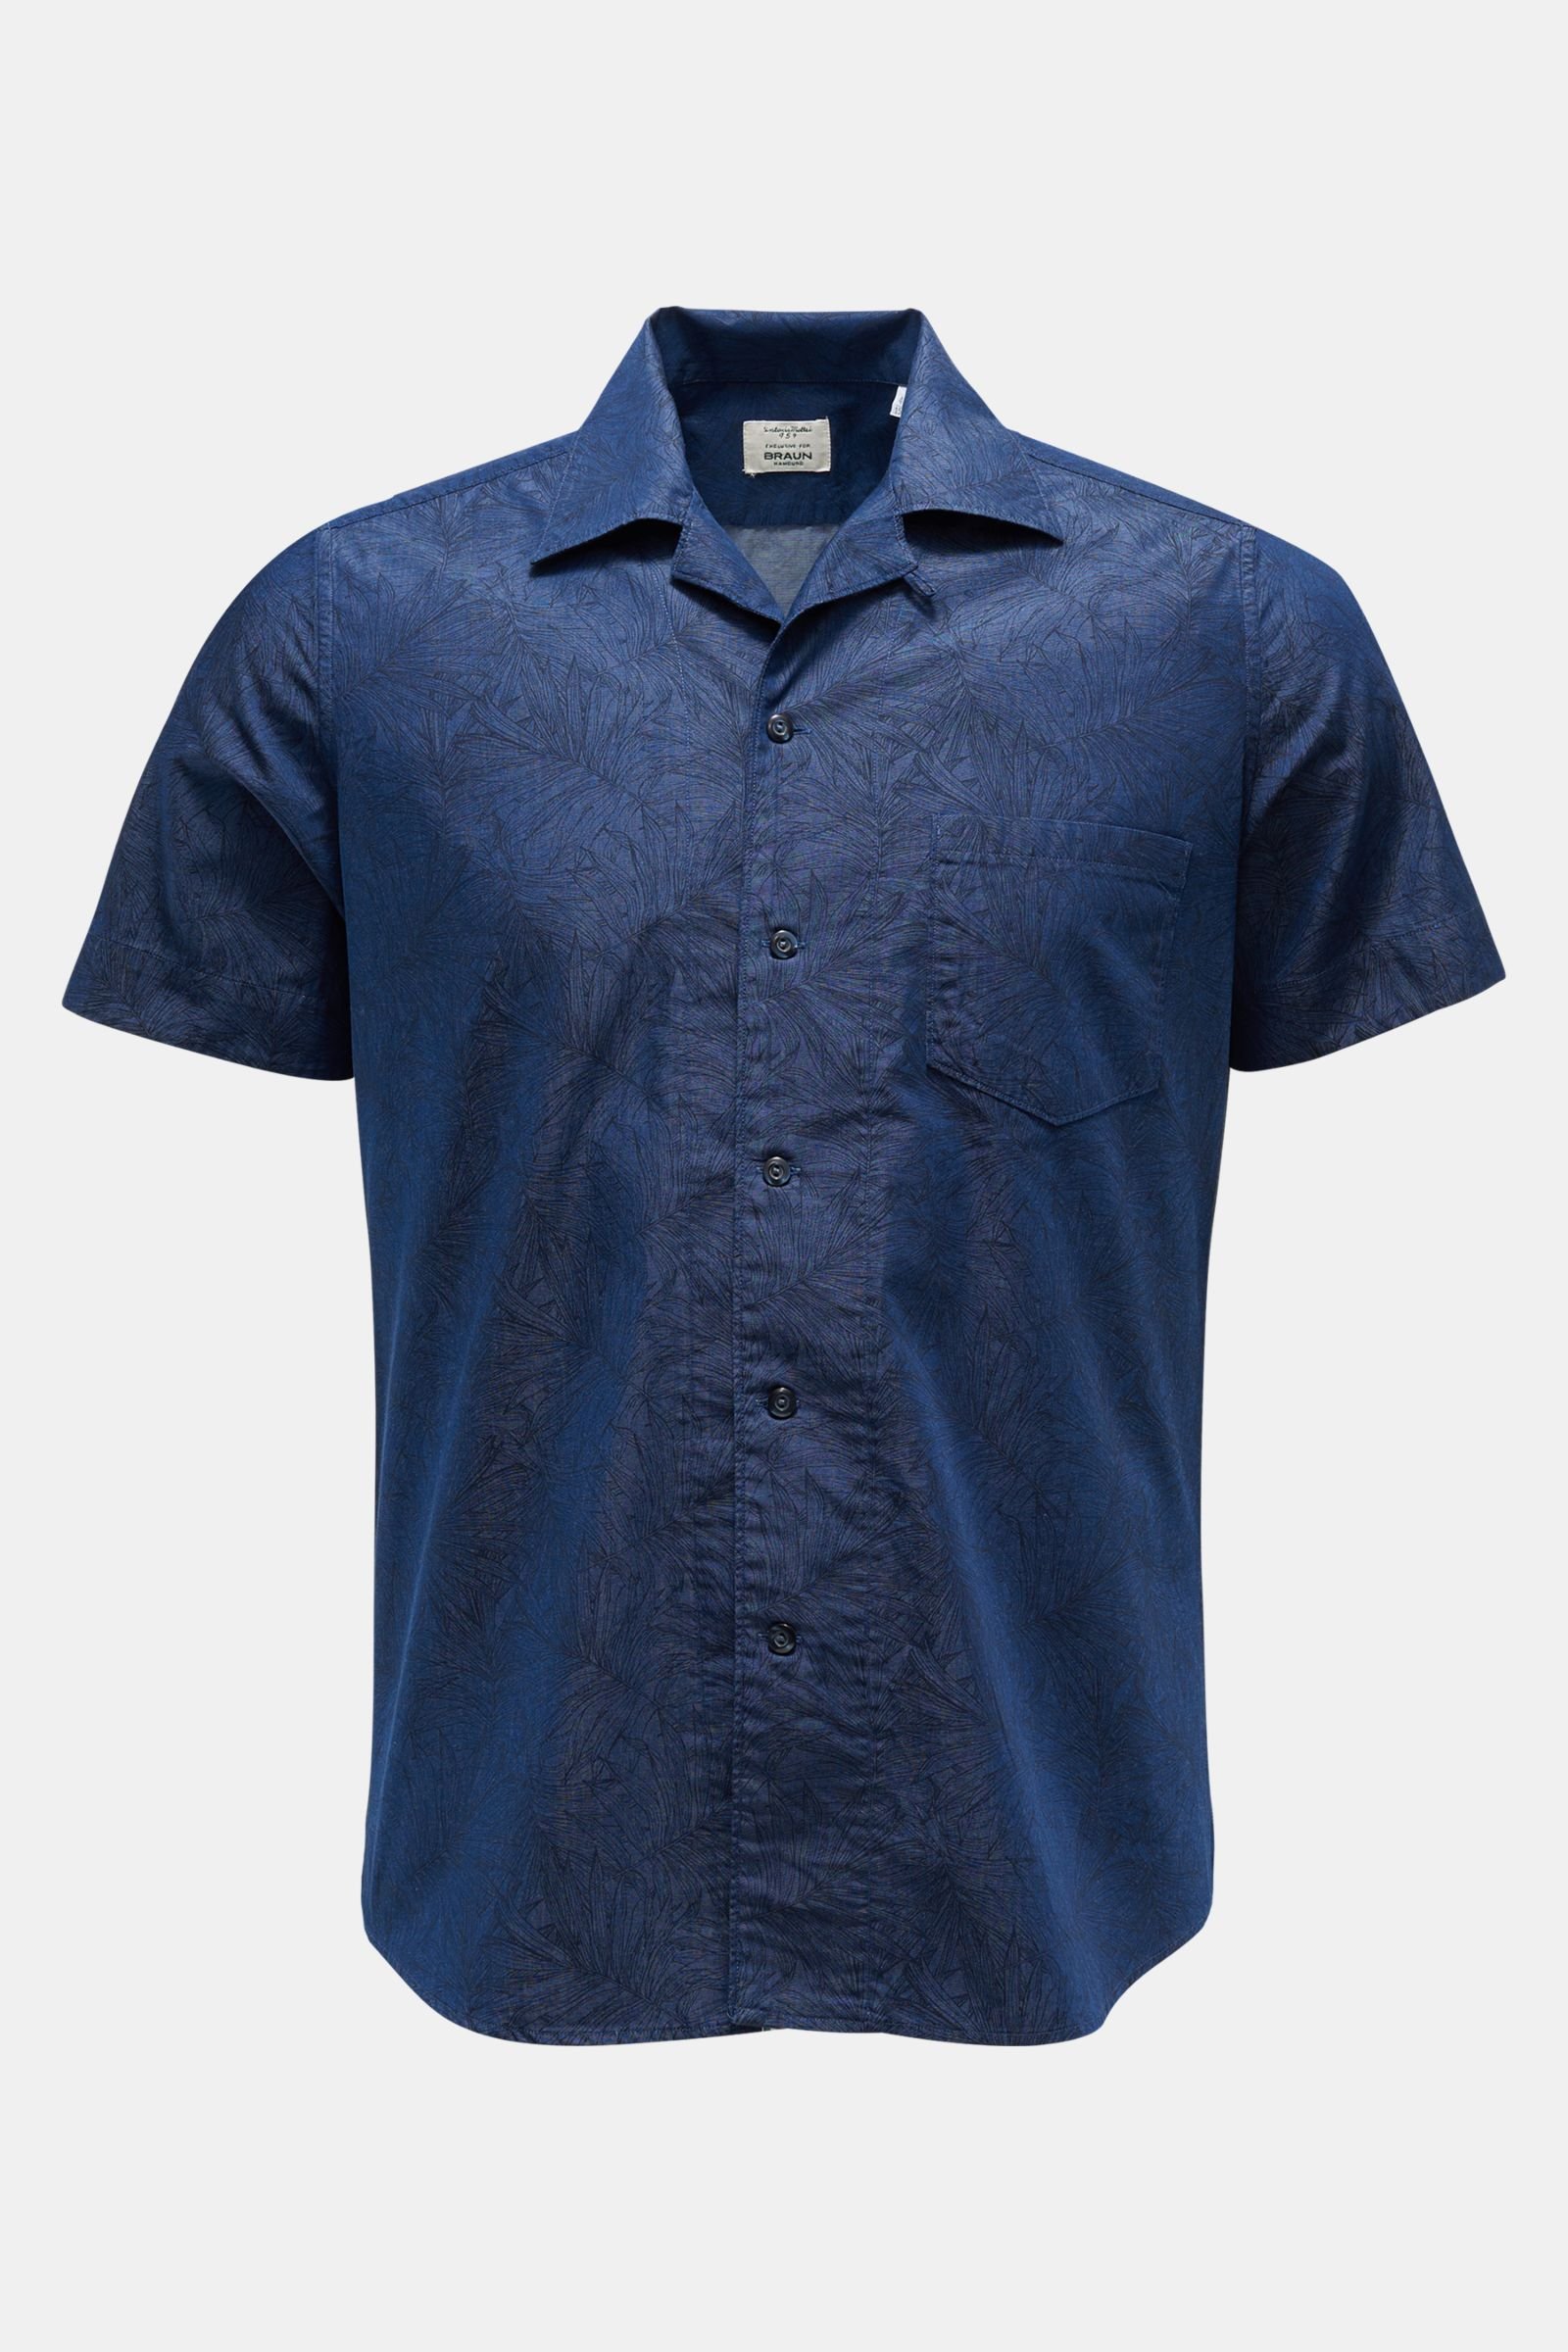 Short sleeve shirt English collar navy patterned